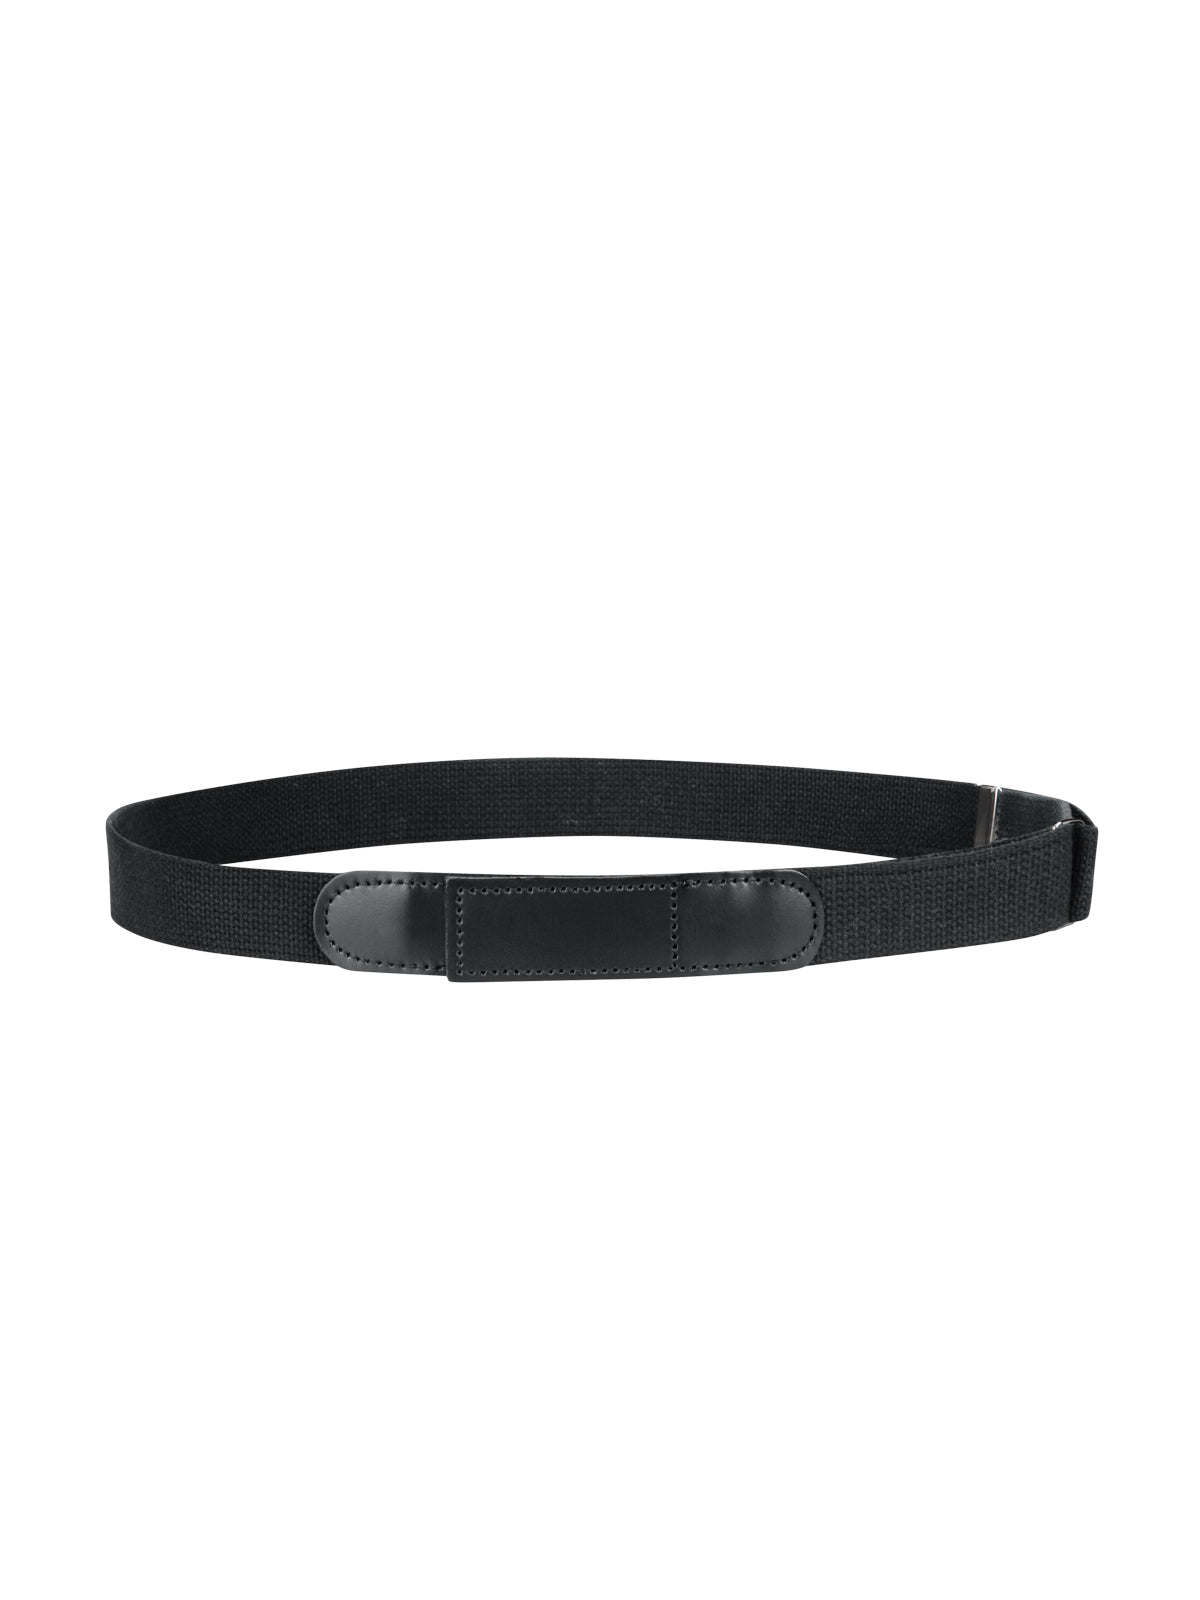 Unisex Webbed Adjustable Belt - AB14 - Black